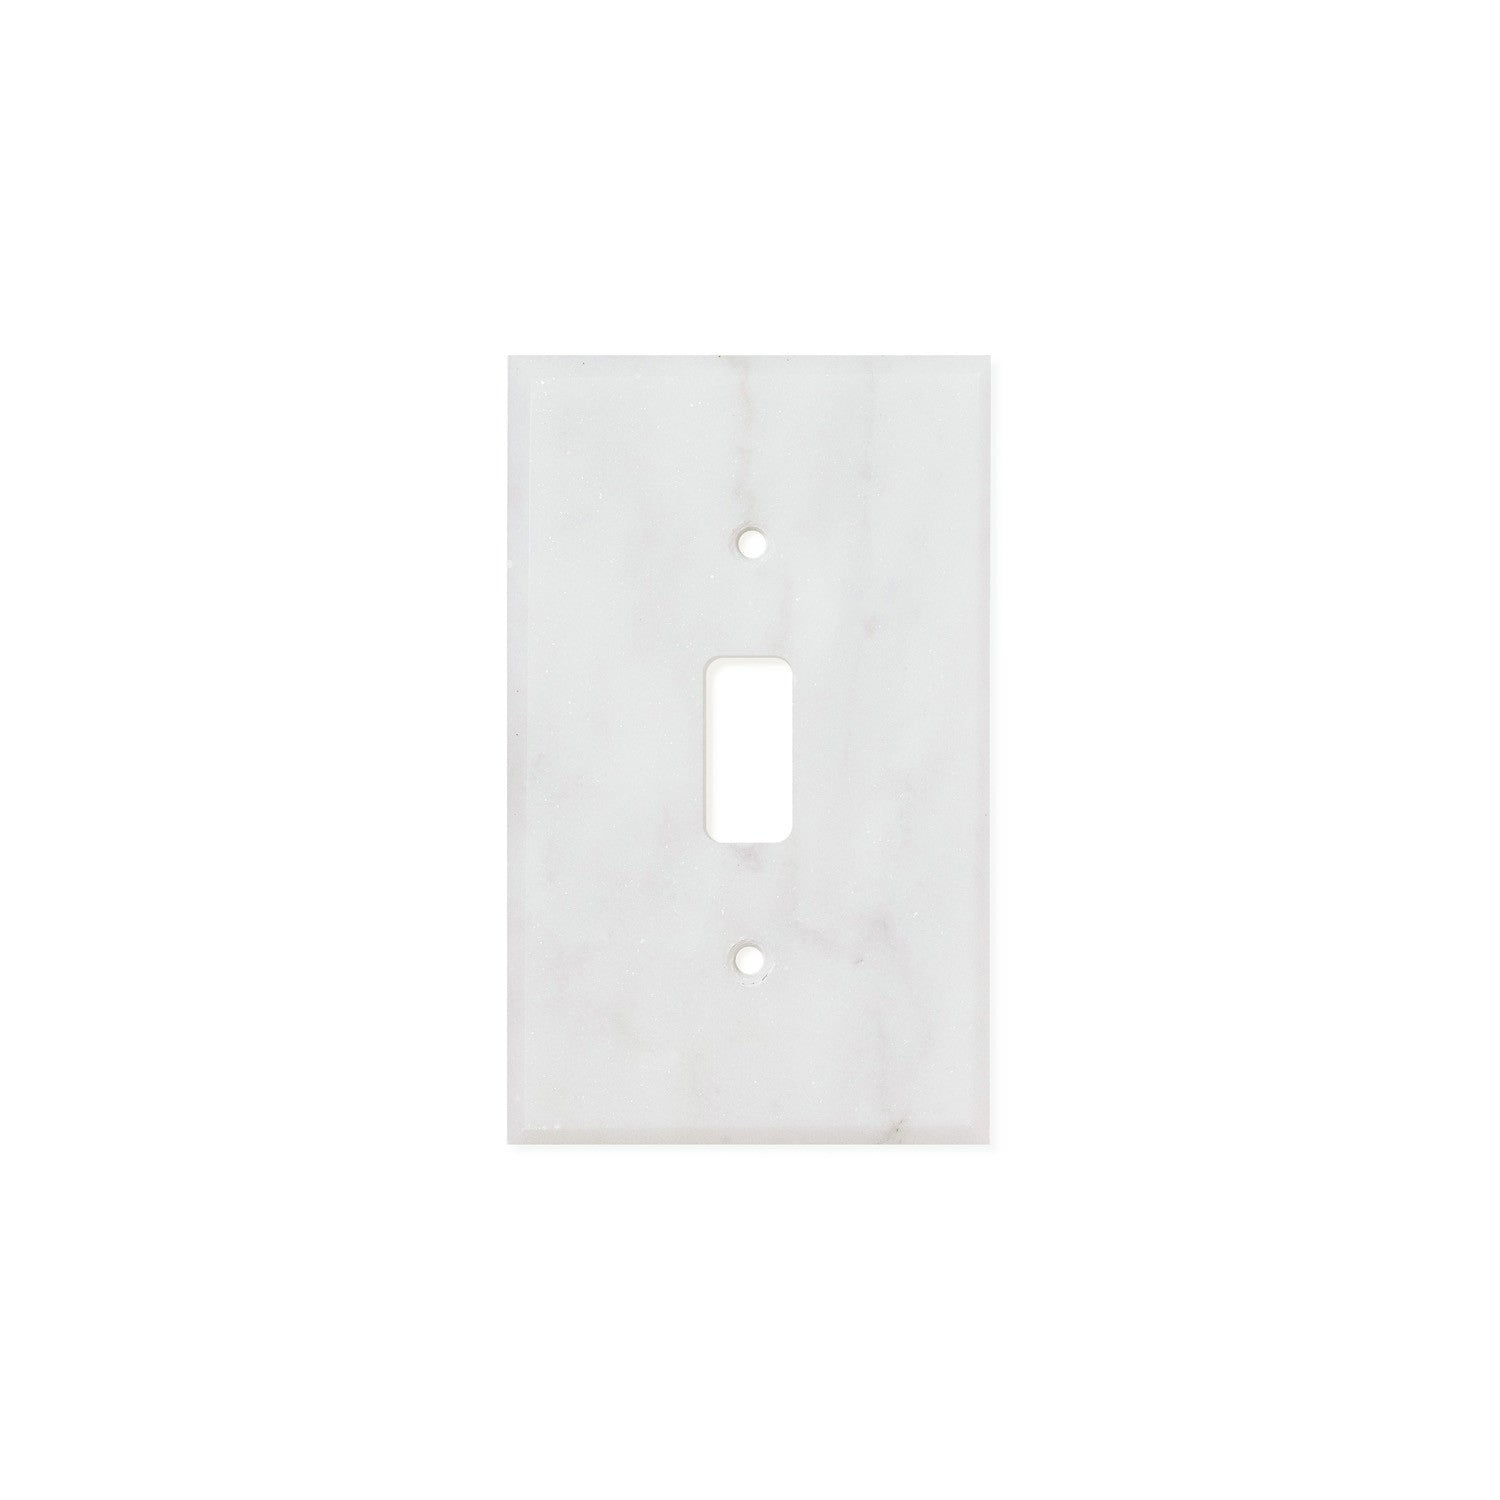 Bianco Carrara (Carrara White) Marble Switch Plate Cover, Honed (SINGLE TOGGLE) - Tilephile